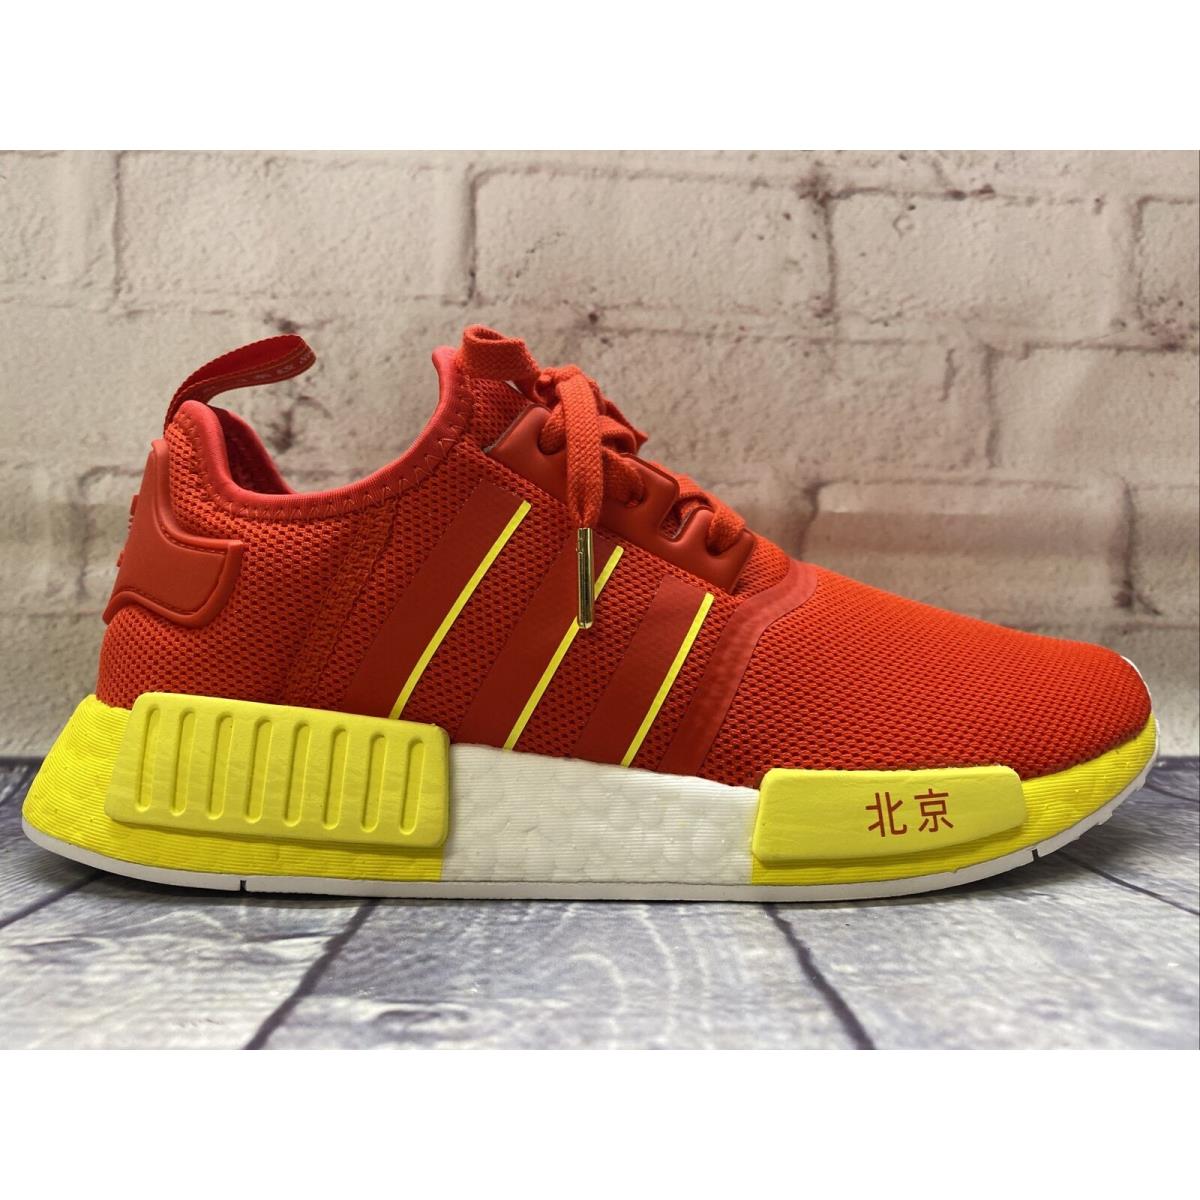 Reacondicionamiento De tormenta punto Adidas Nmd R1 Beijing China Red Yellow Running Shoes FY1262 Men s Size 8 |  692740606651 - Adidas shoes NMD - Red | SporTipTop